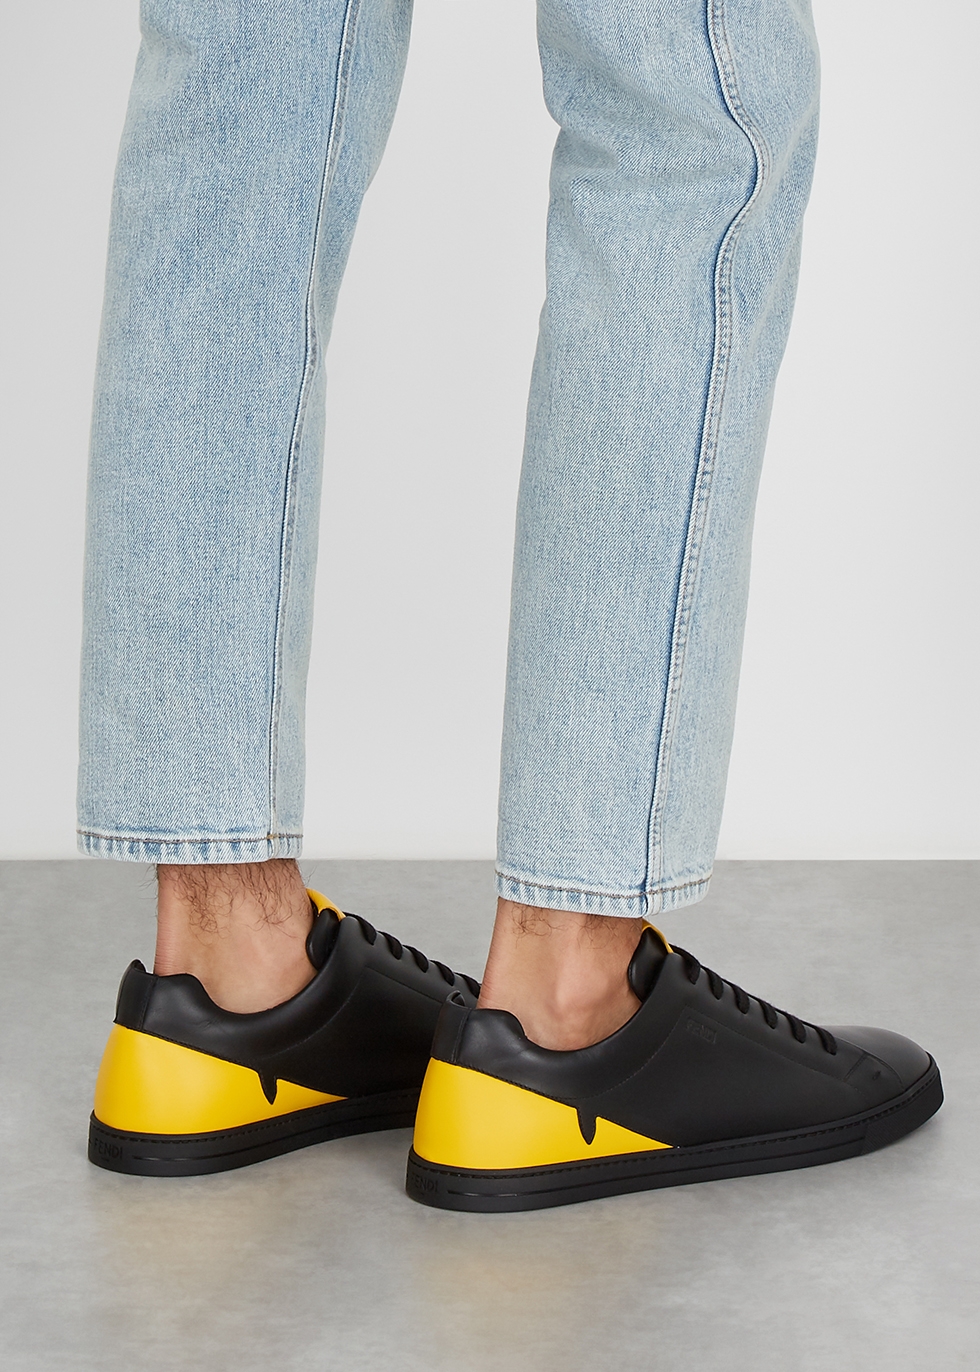 fendi black and yellow sneakers